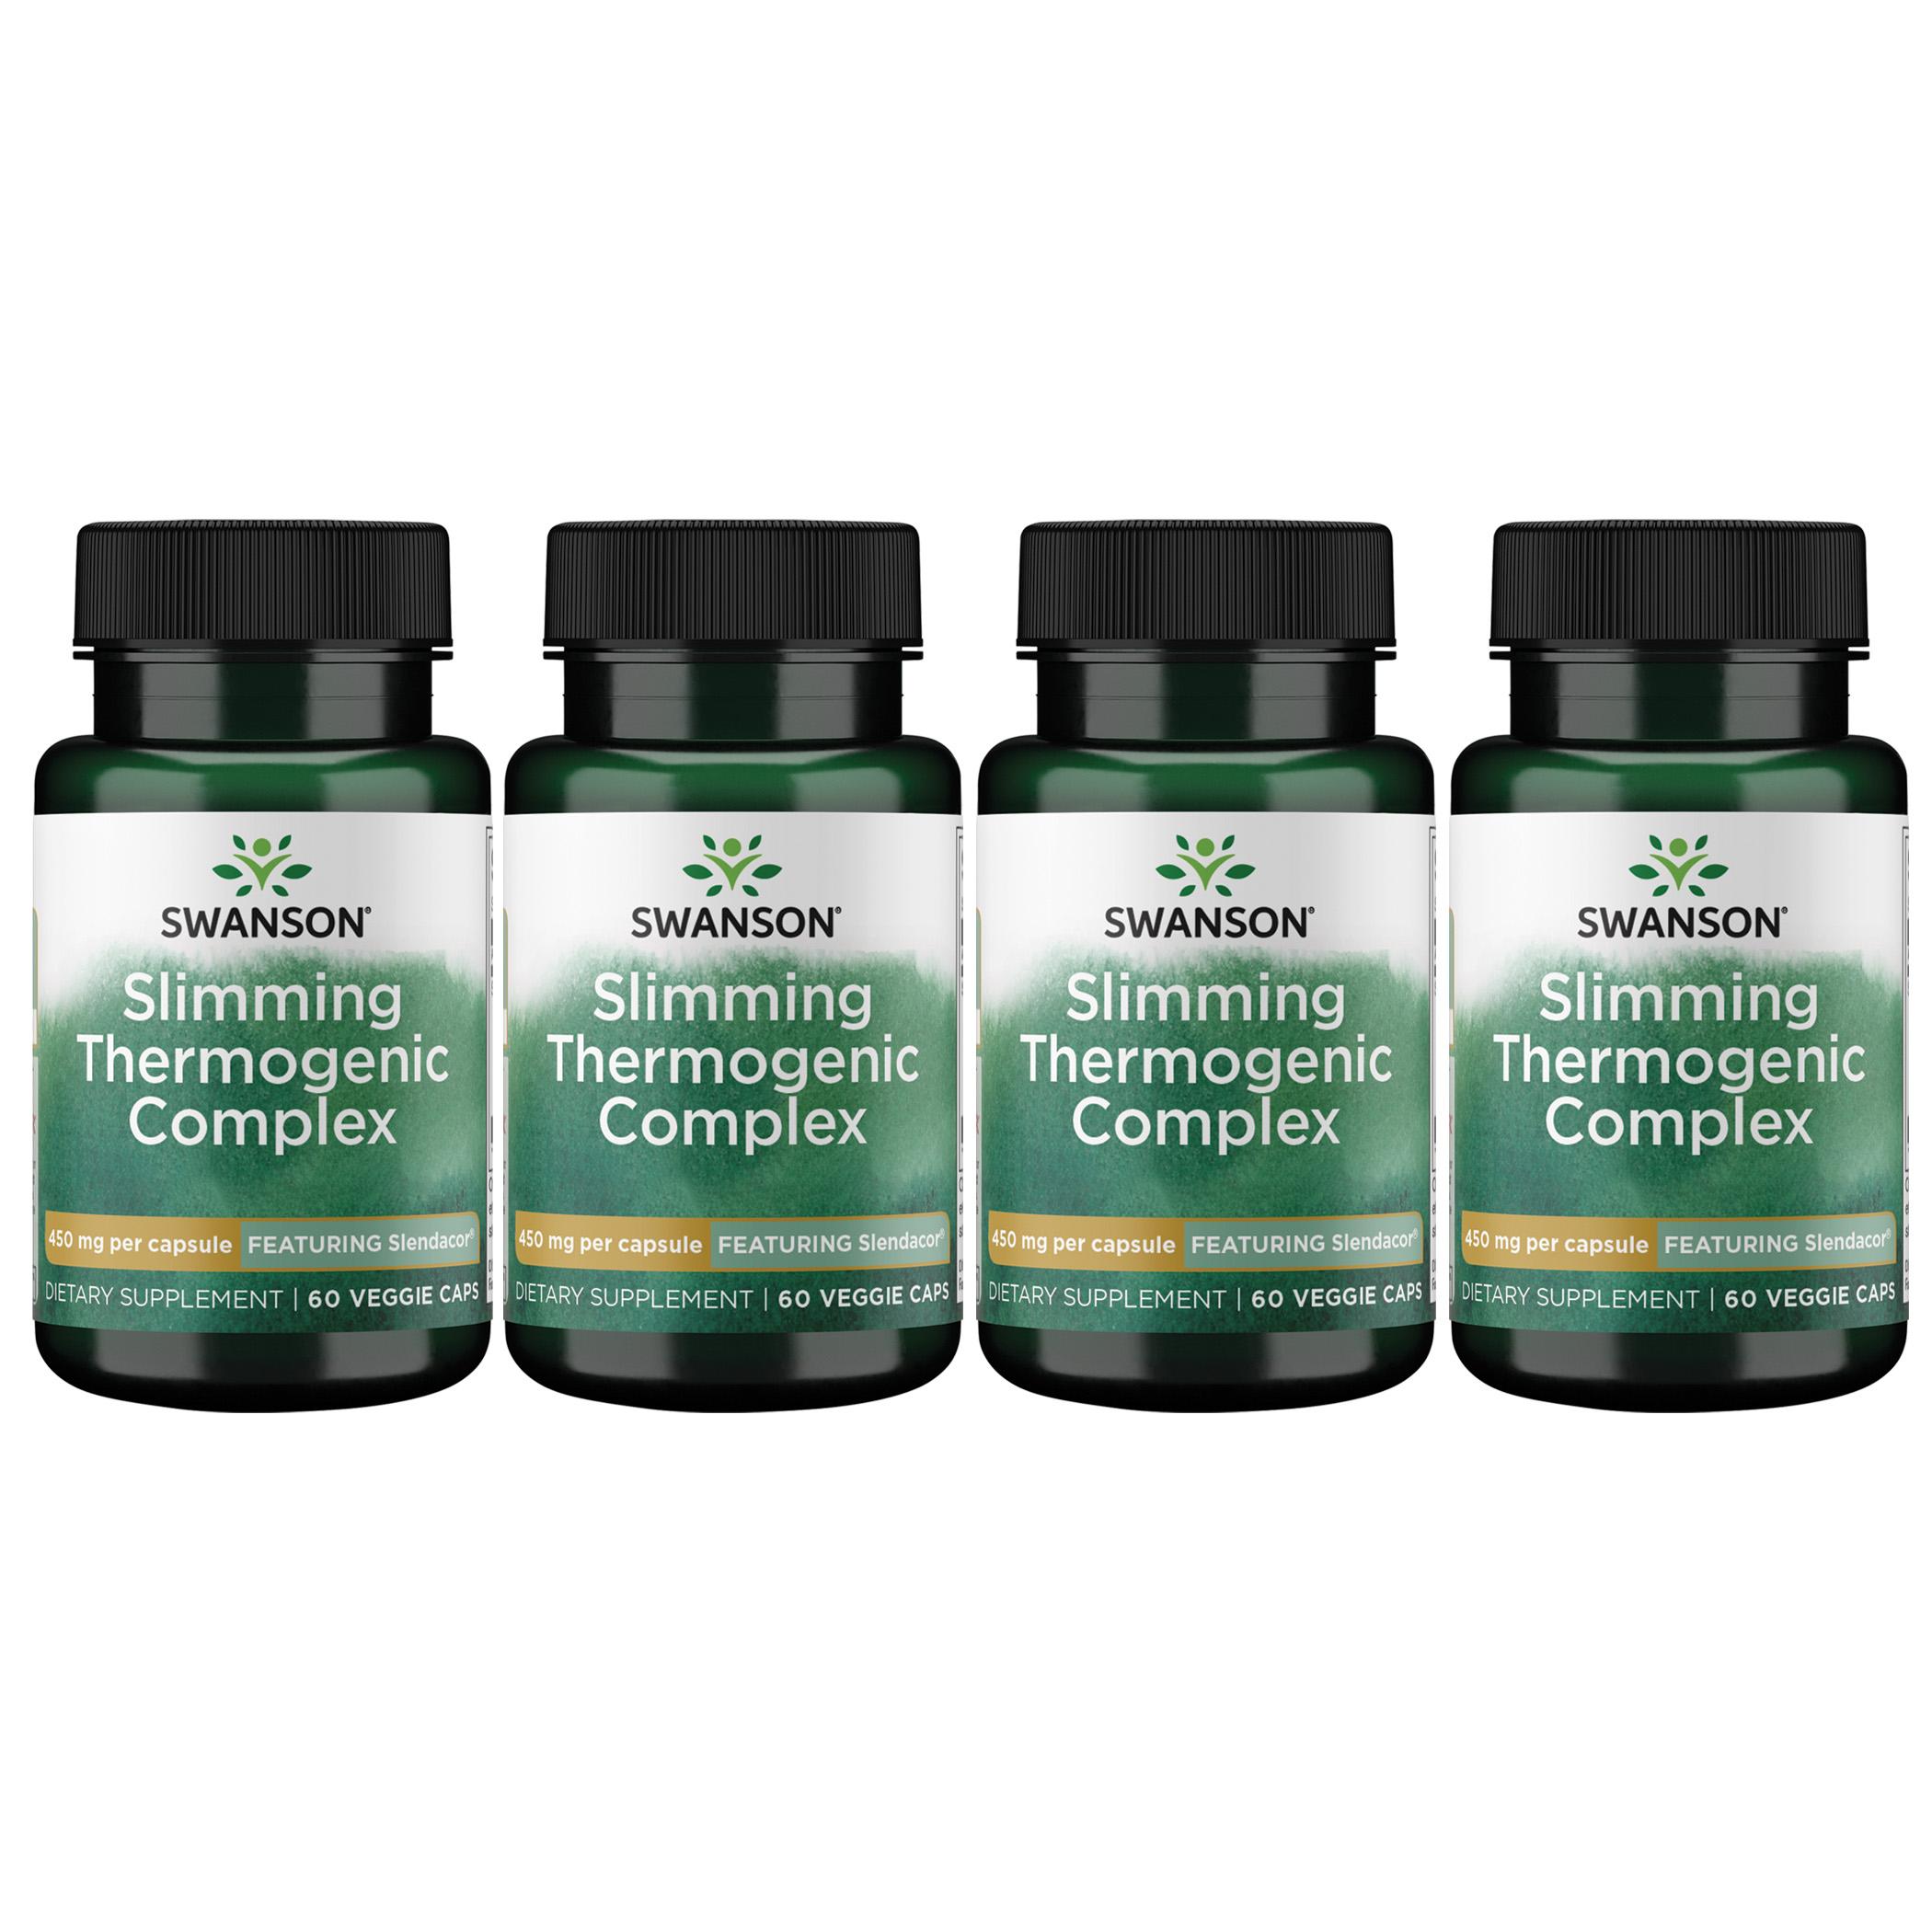 Swanson Premium Slimming Thermogenic Complex - Featuring Slendacor 4 Pack Vitamin 450 mg 60 Veg Caps Weight Management